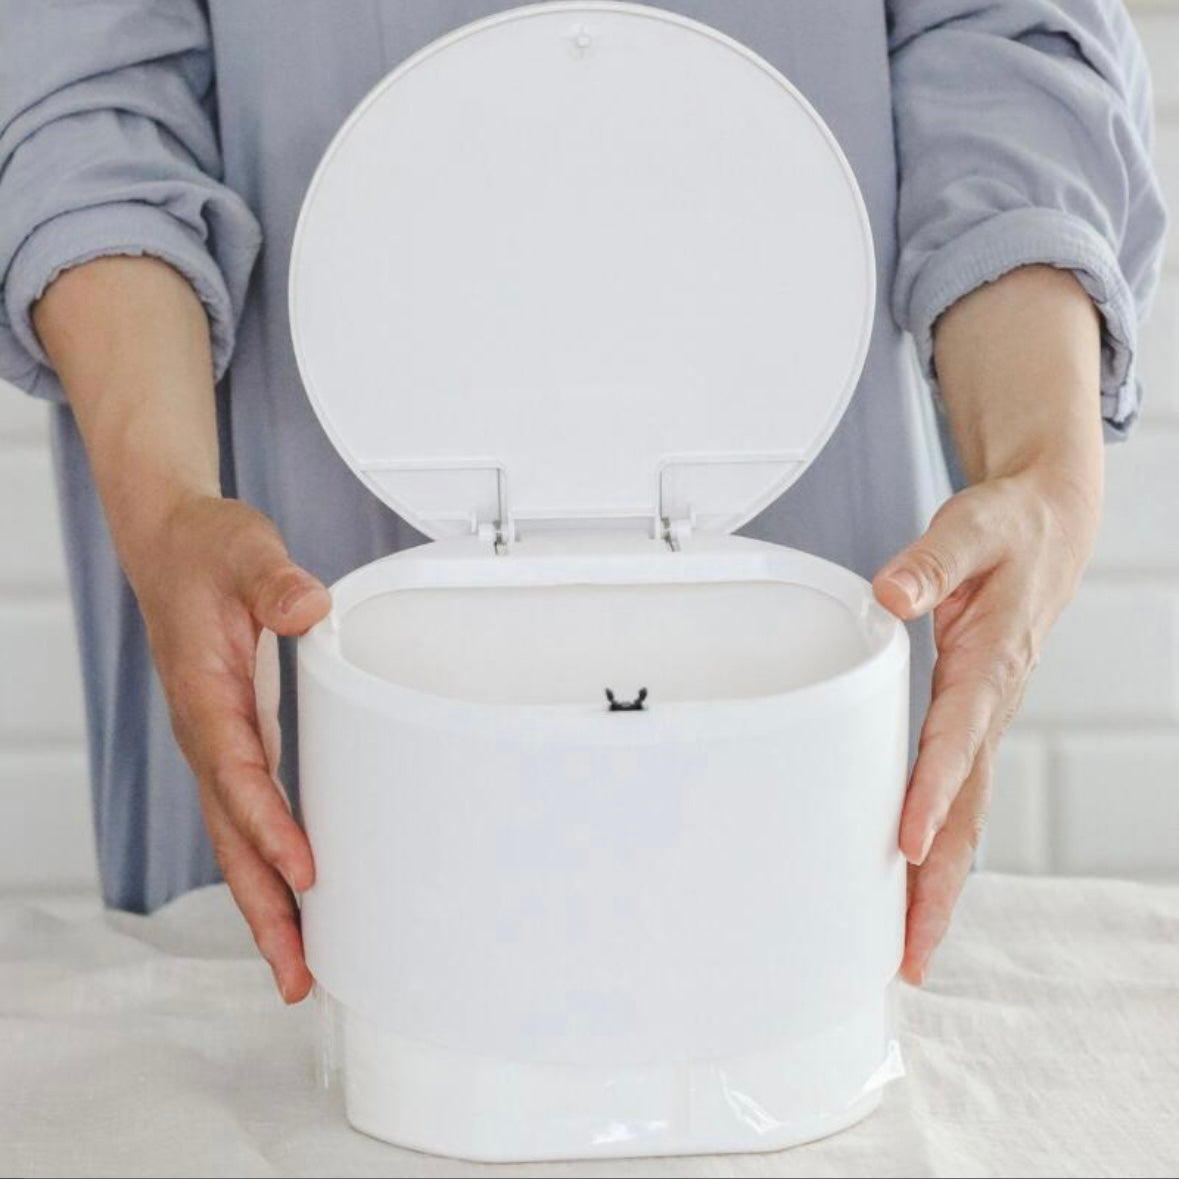 ideaco TUBELOR flat20 イデアコ チューブラー ホワイト サンドホワイト 卓上ゴミ箱 生ゴミ 丸型 衛生的 水拭き 丸洗い